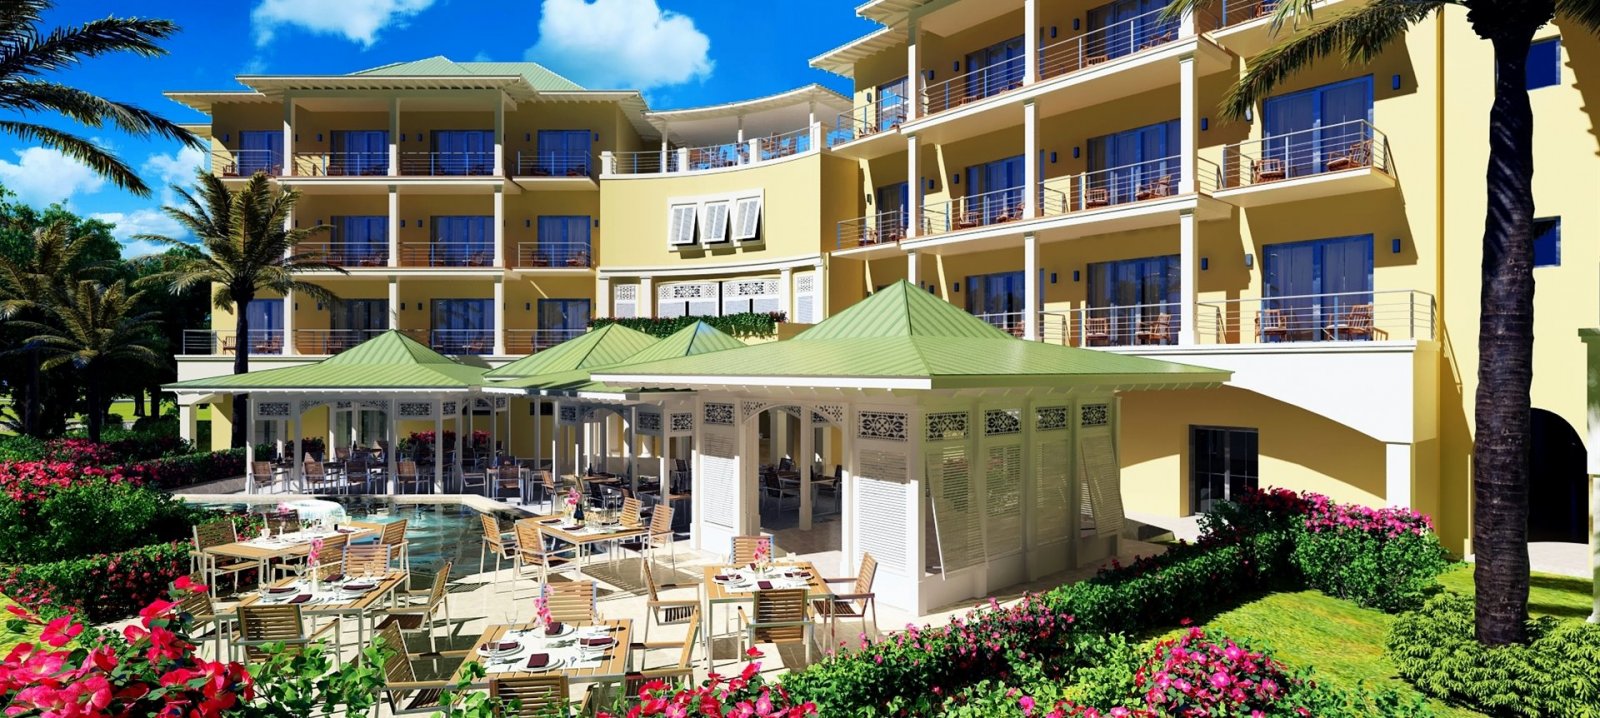 Best Western Premier Hotel - Antigua